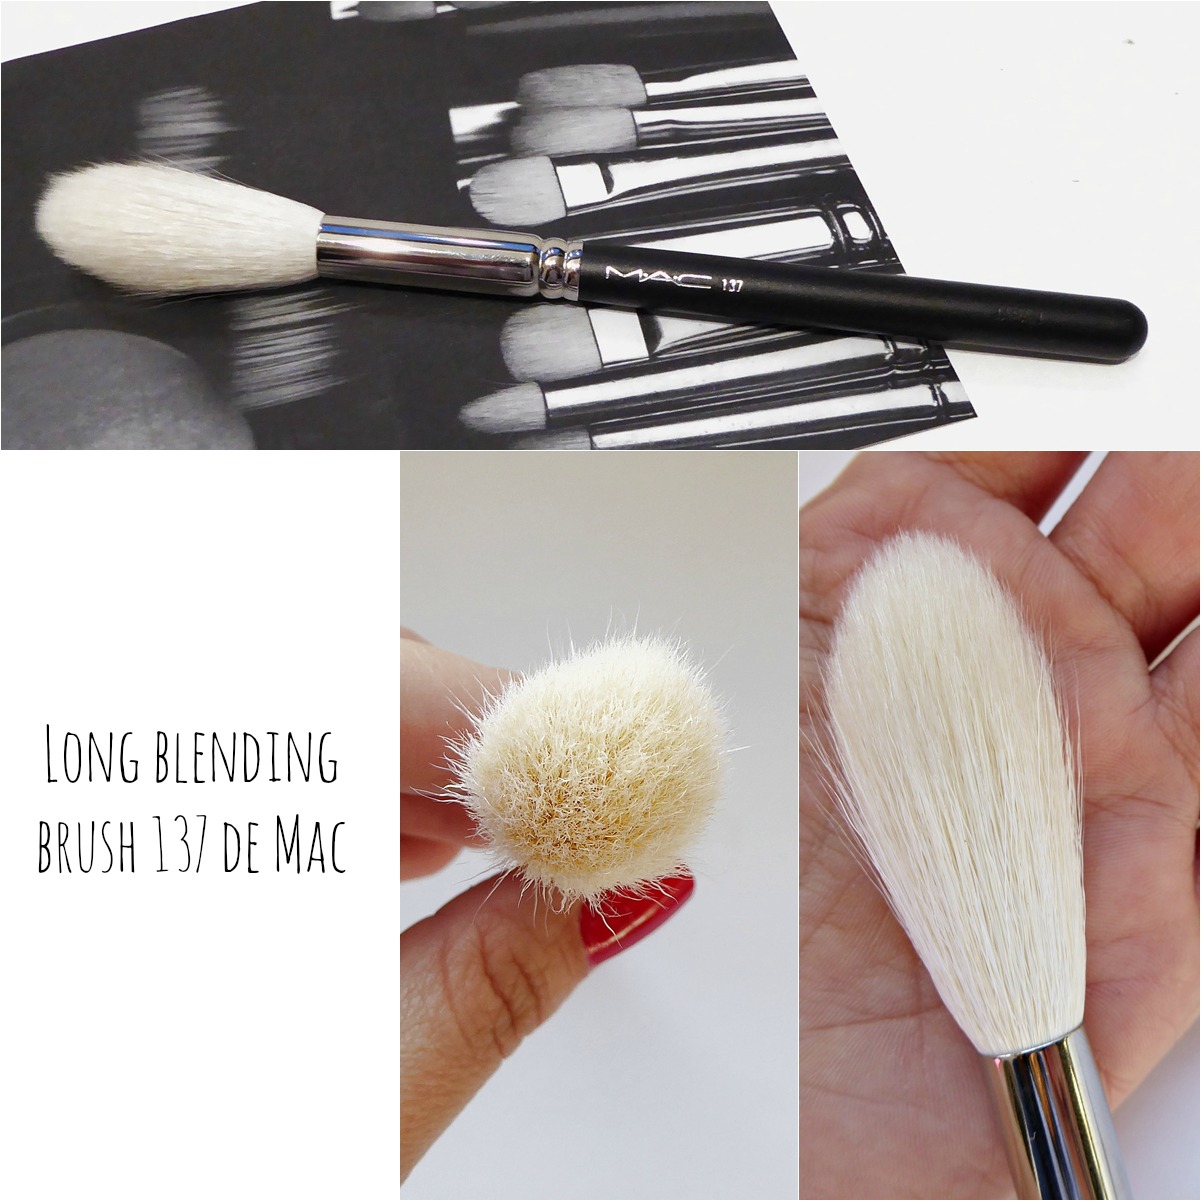 Long blending brush 137 de Mac, una brocha para colorete e iluminador